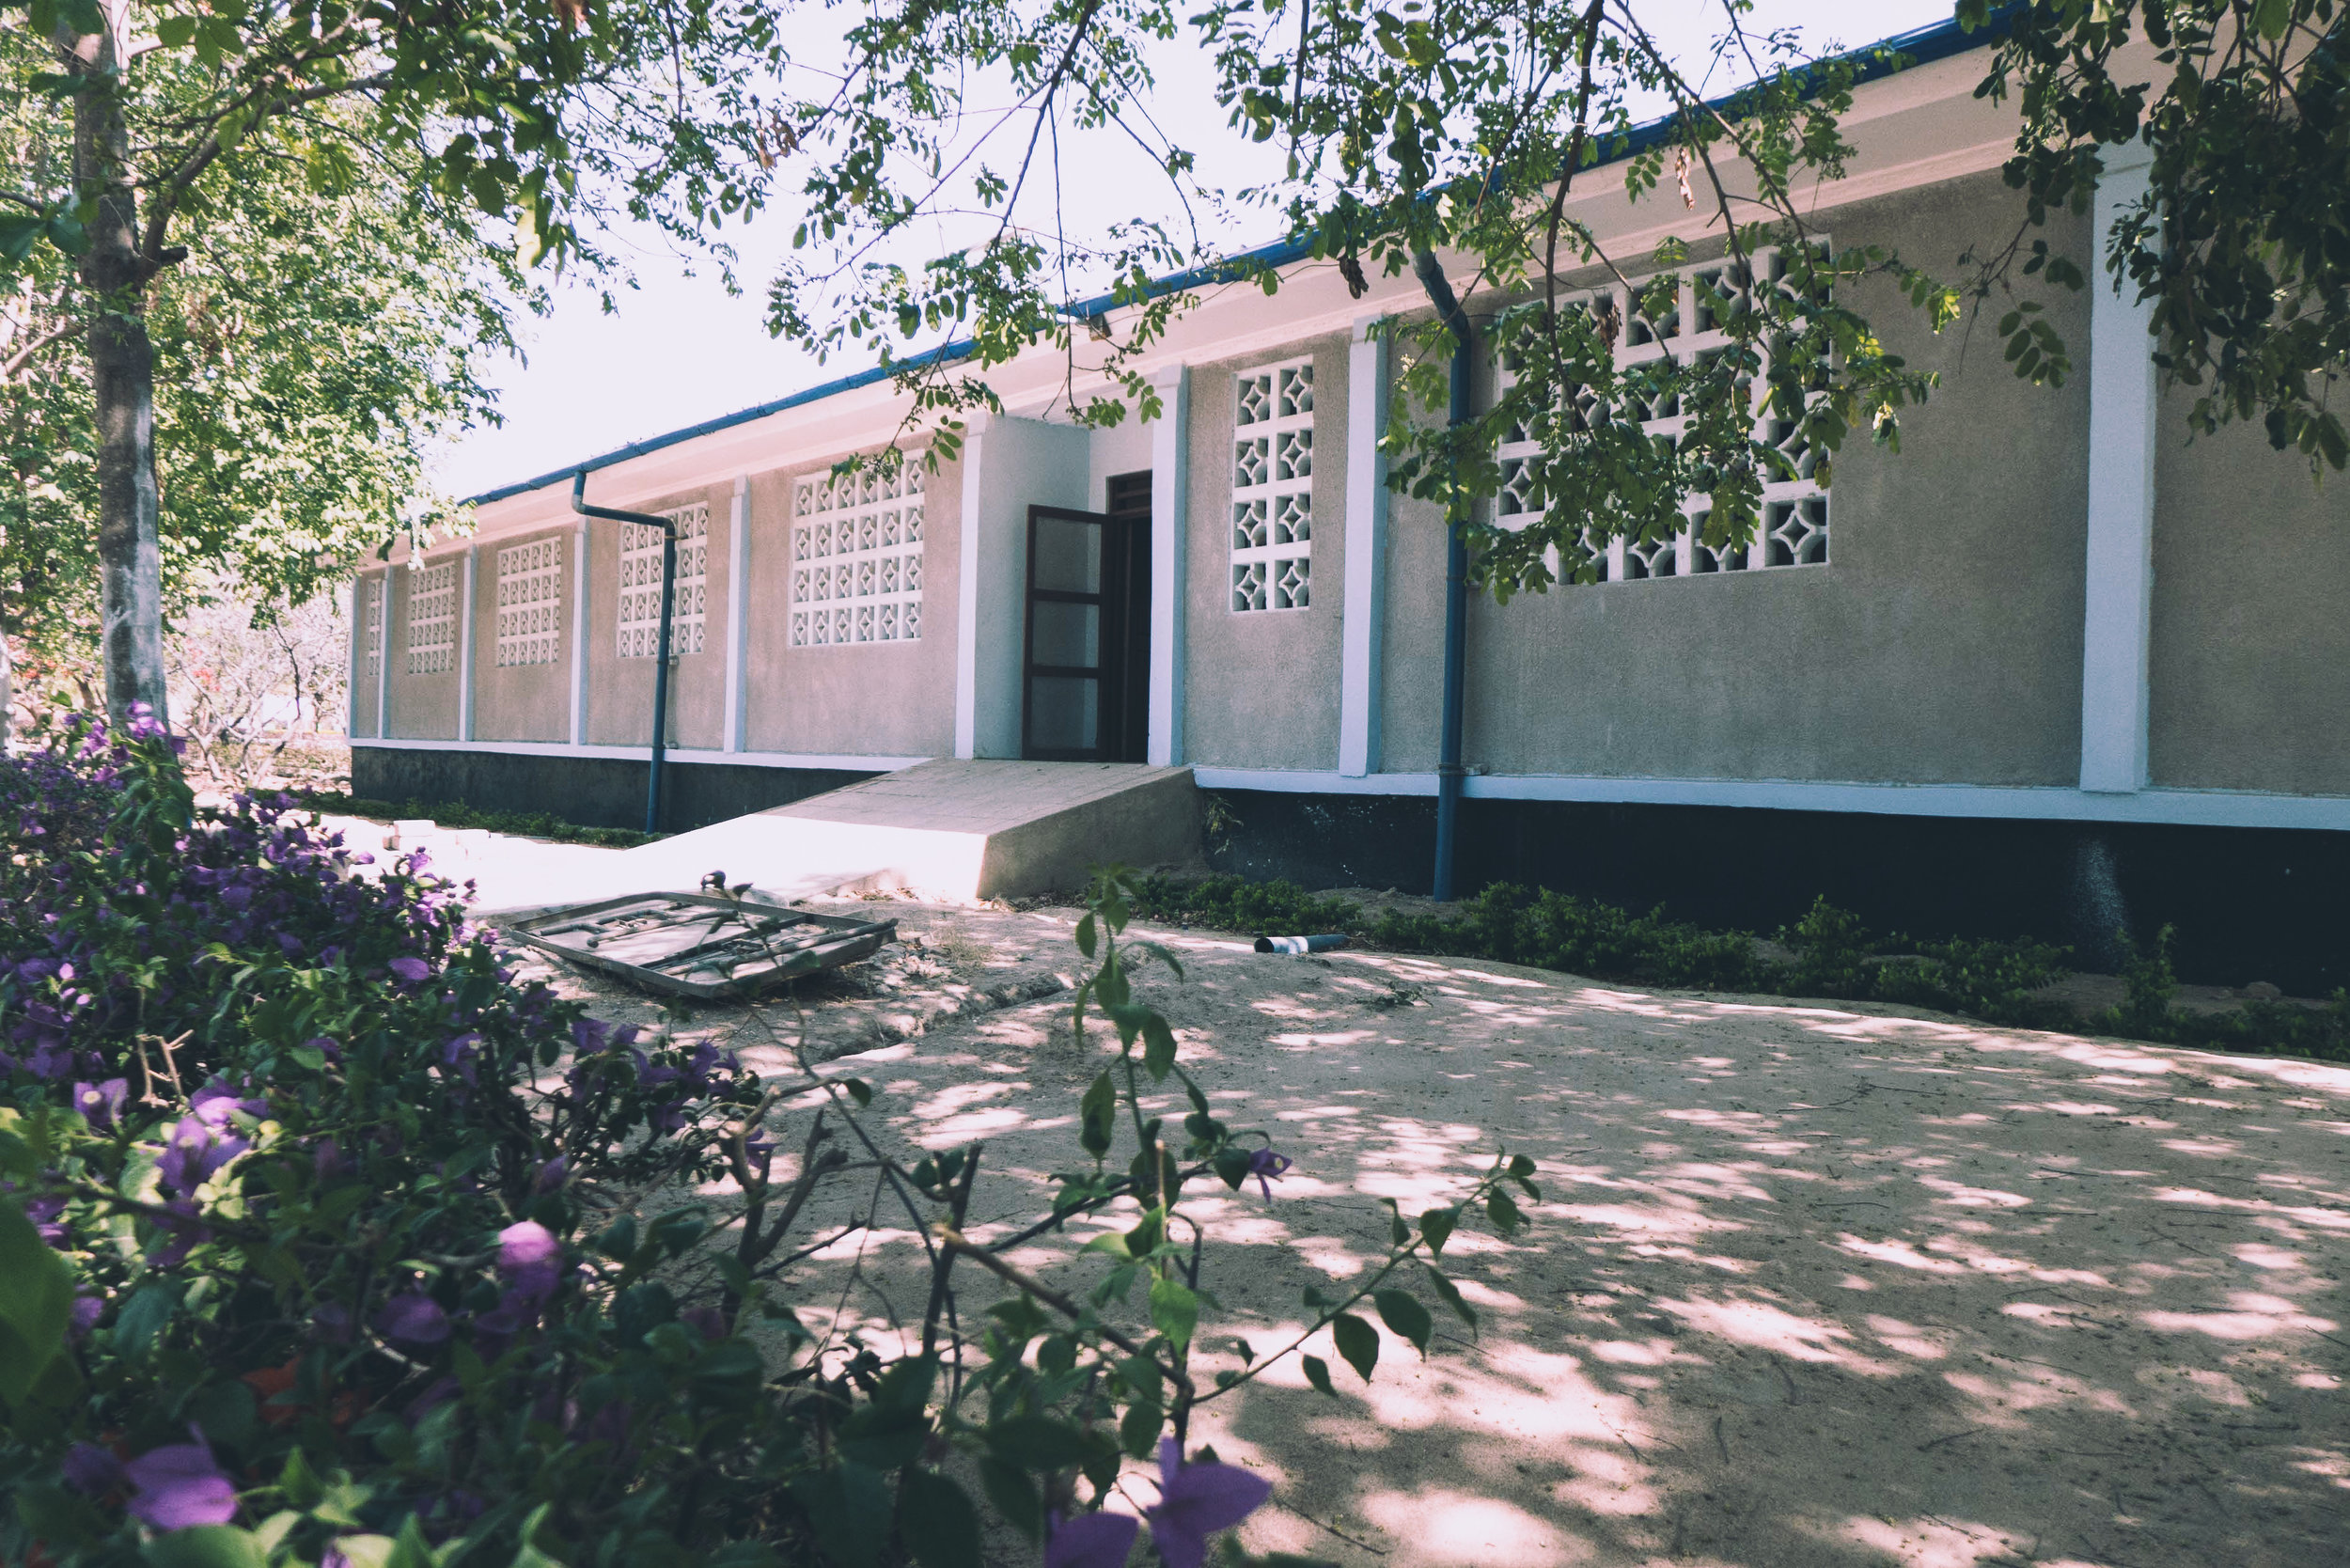 Tanzania_cafeteria remodel.jpg